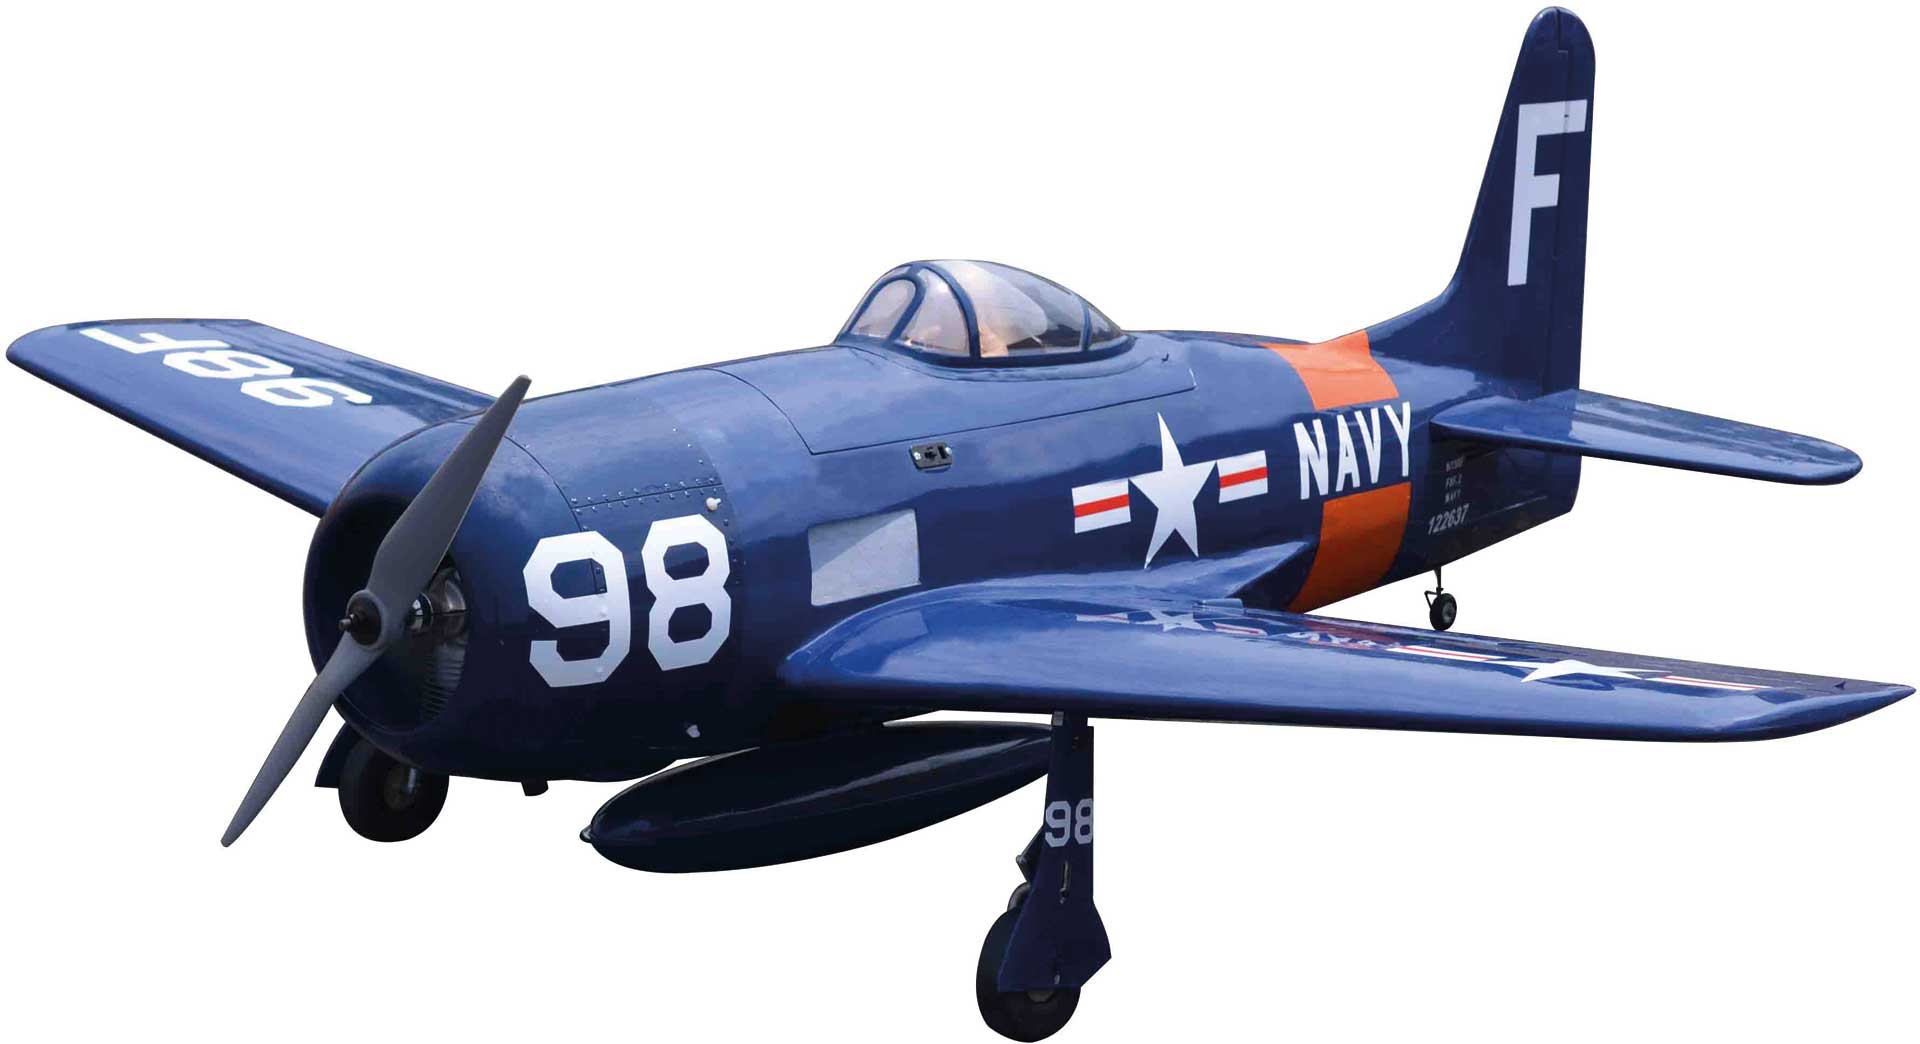 Seagull Models ( SG-Models ) Grumman F8F-2 Bearcat "NAVY" ARF 71" Warbird avec train d'atterrissage rétractable machinique 33-45cc